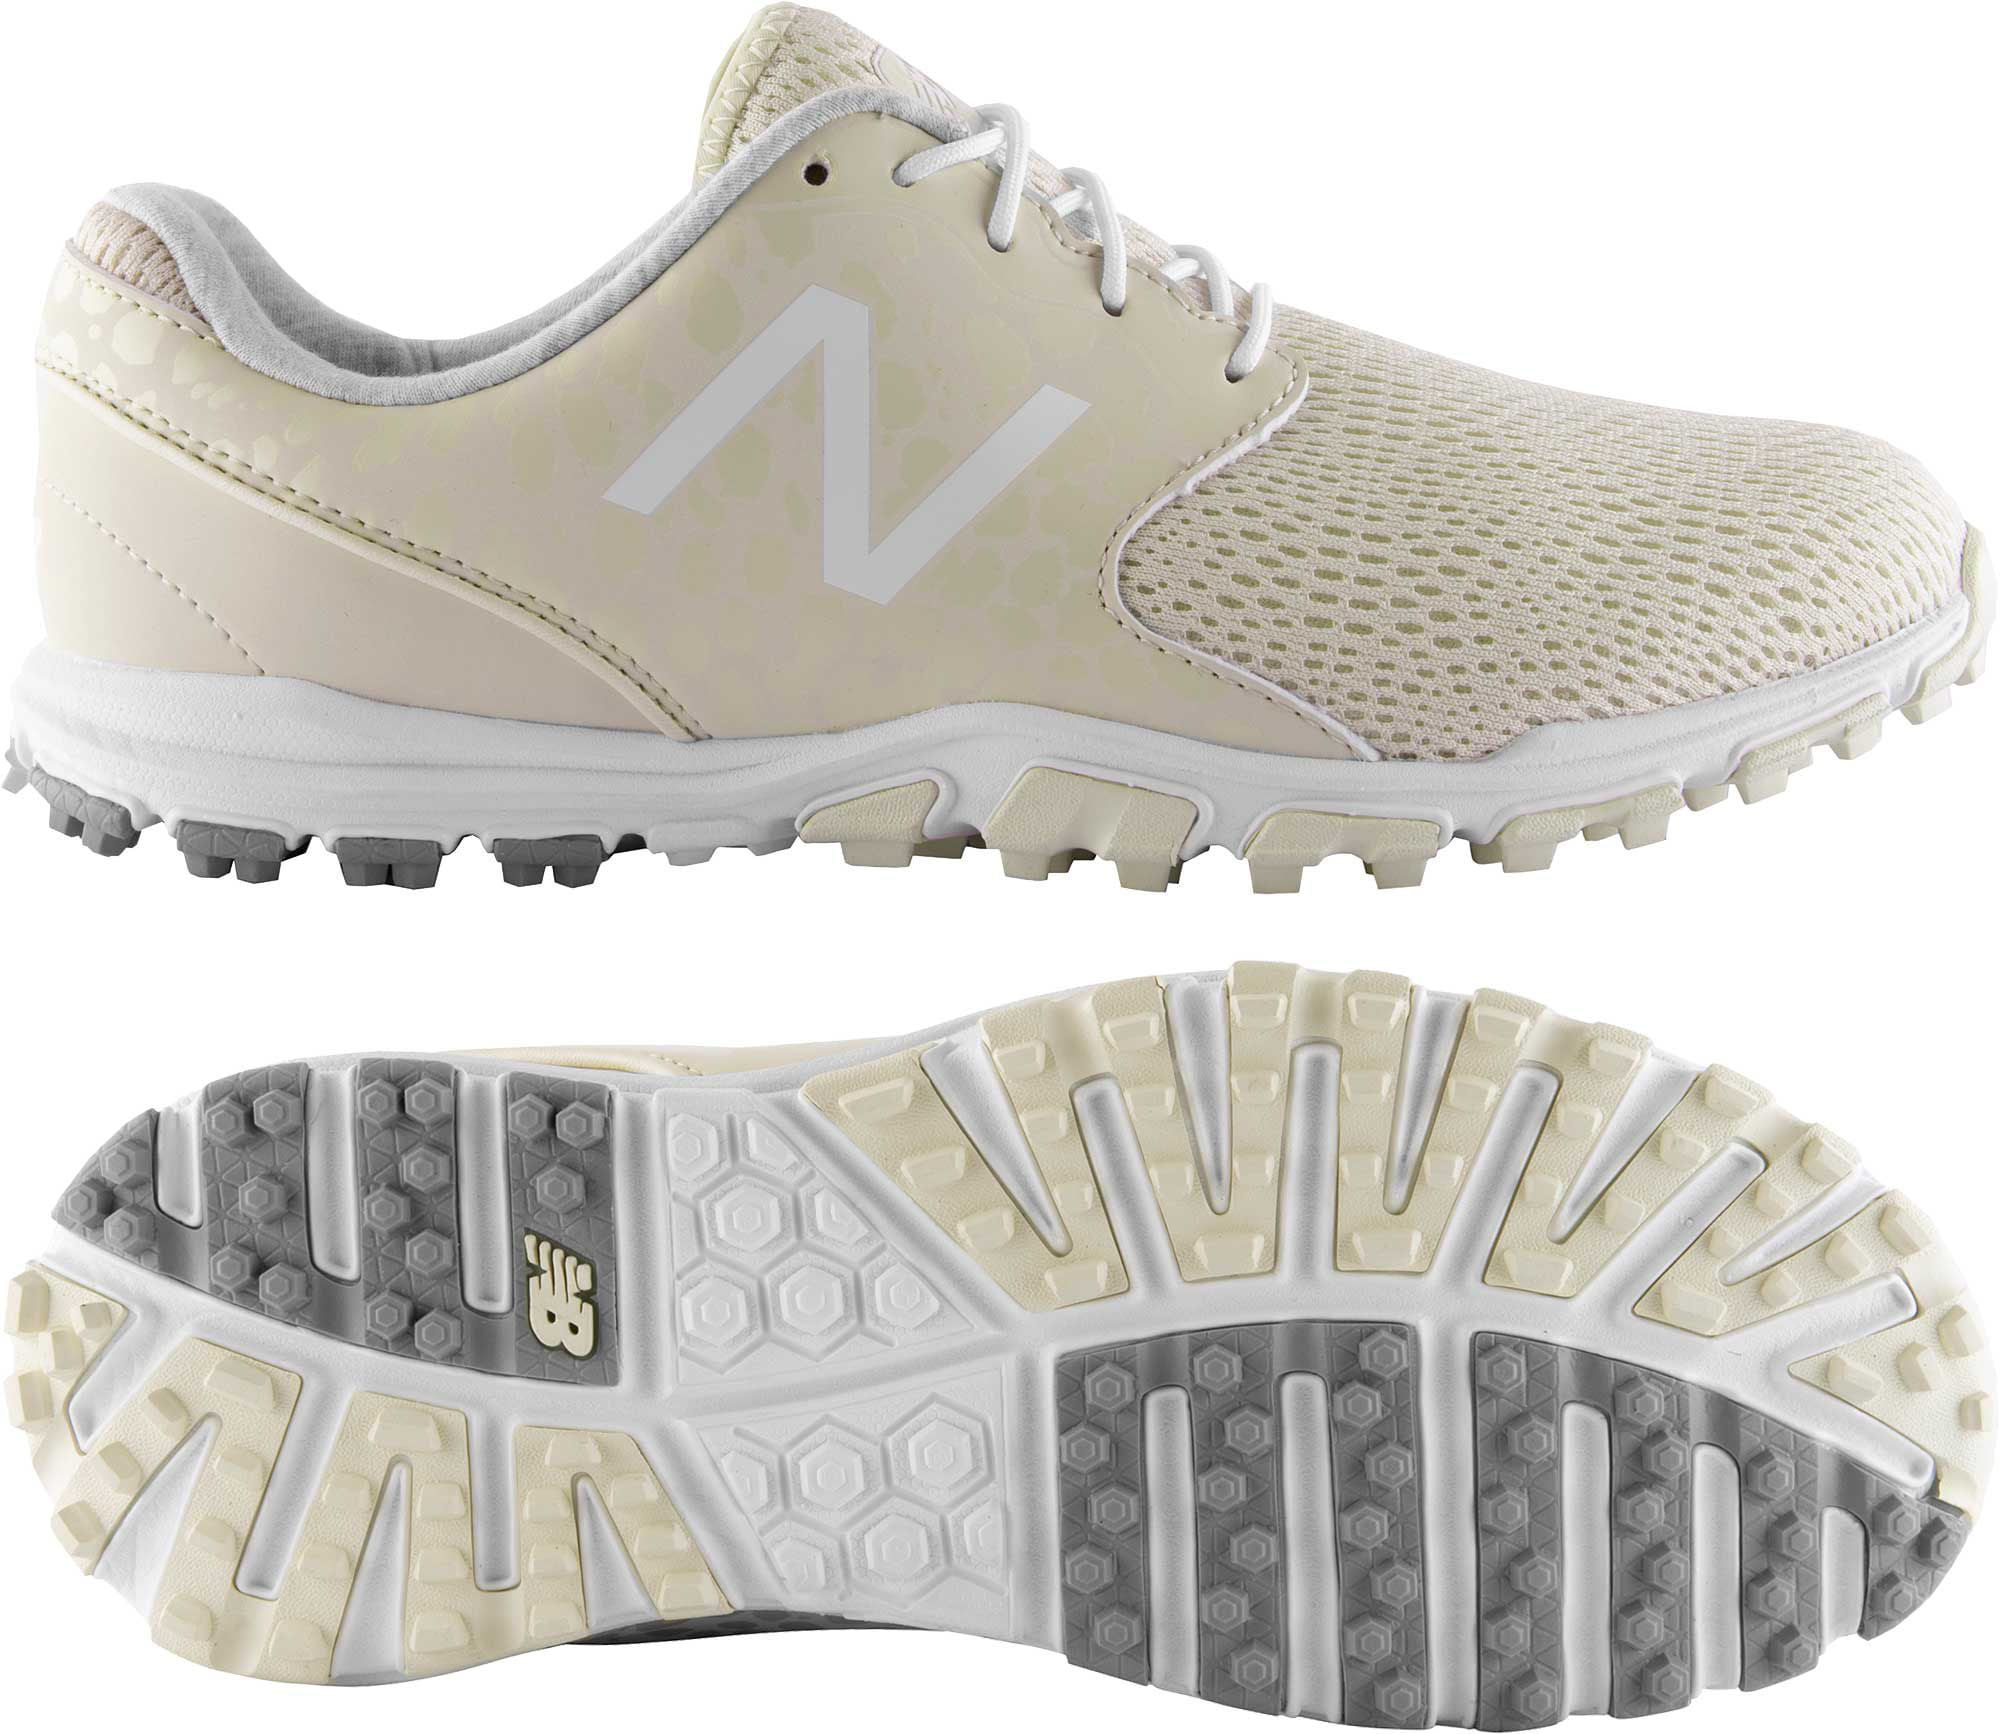 New Balance - New Balance Women's Minimus SL Golf Shoes - Walmart.com ...